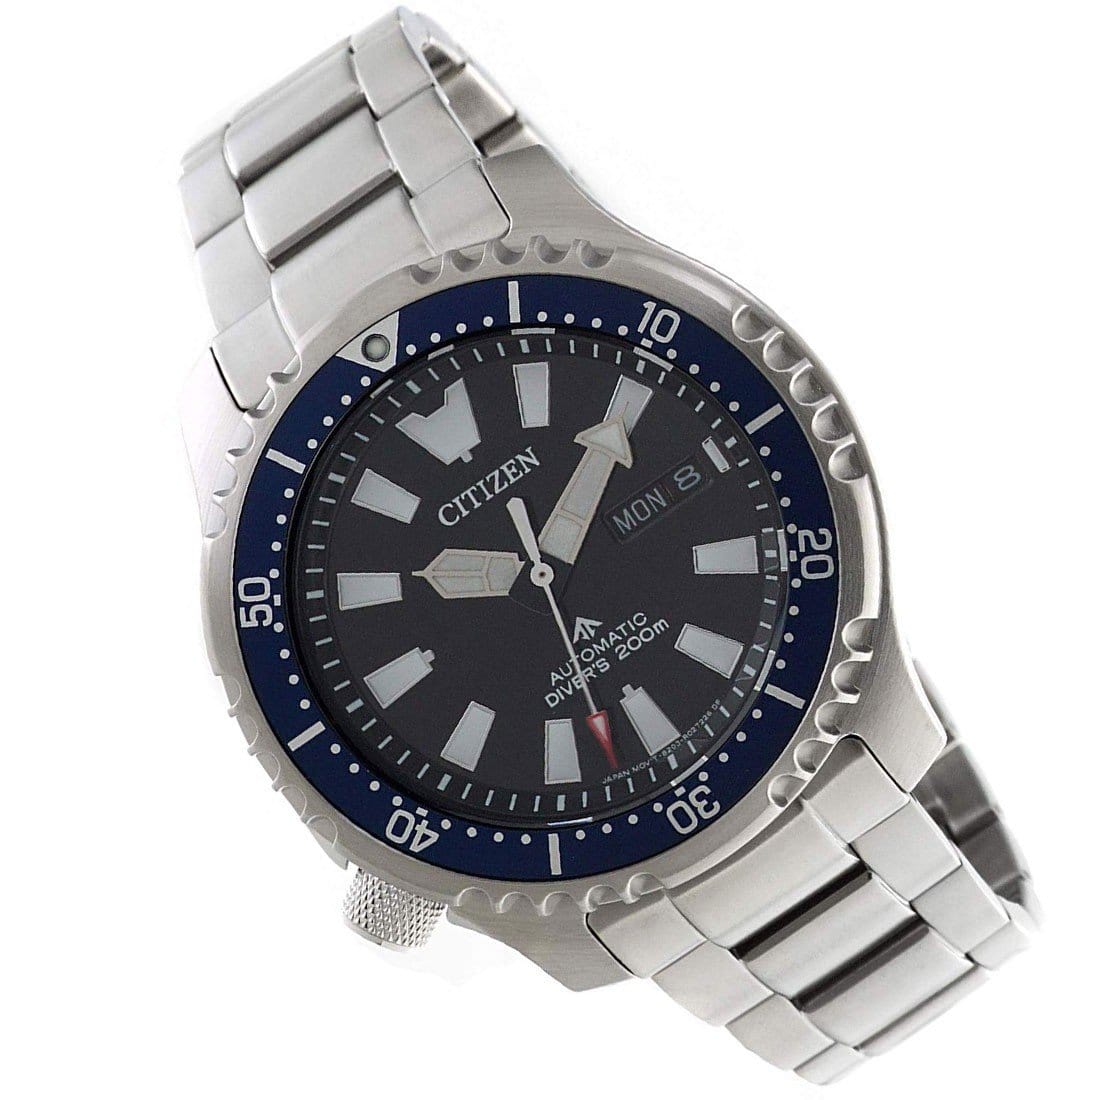 Citizen Promaster Fugu Limited Edition Diver's 200m Automatic Black Dial Silver Strap Watch For Men - NY0098-84E